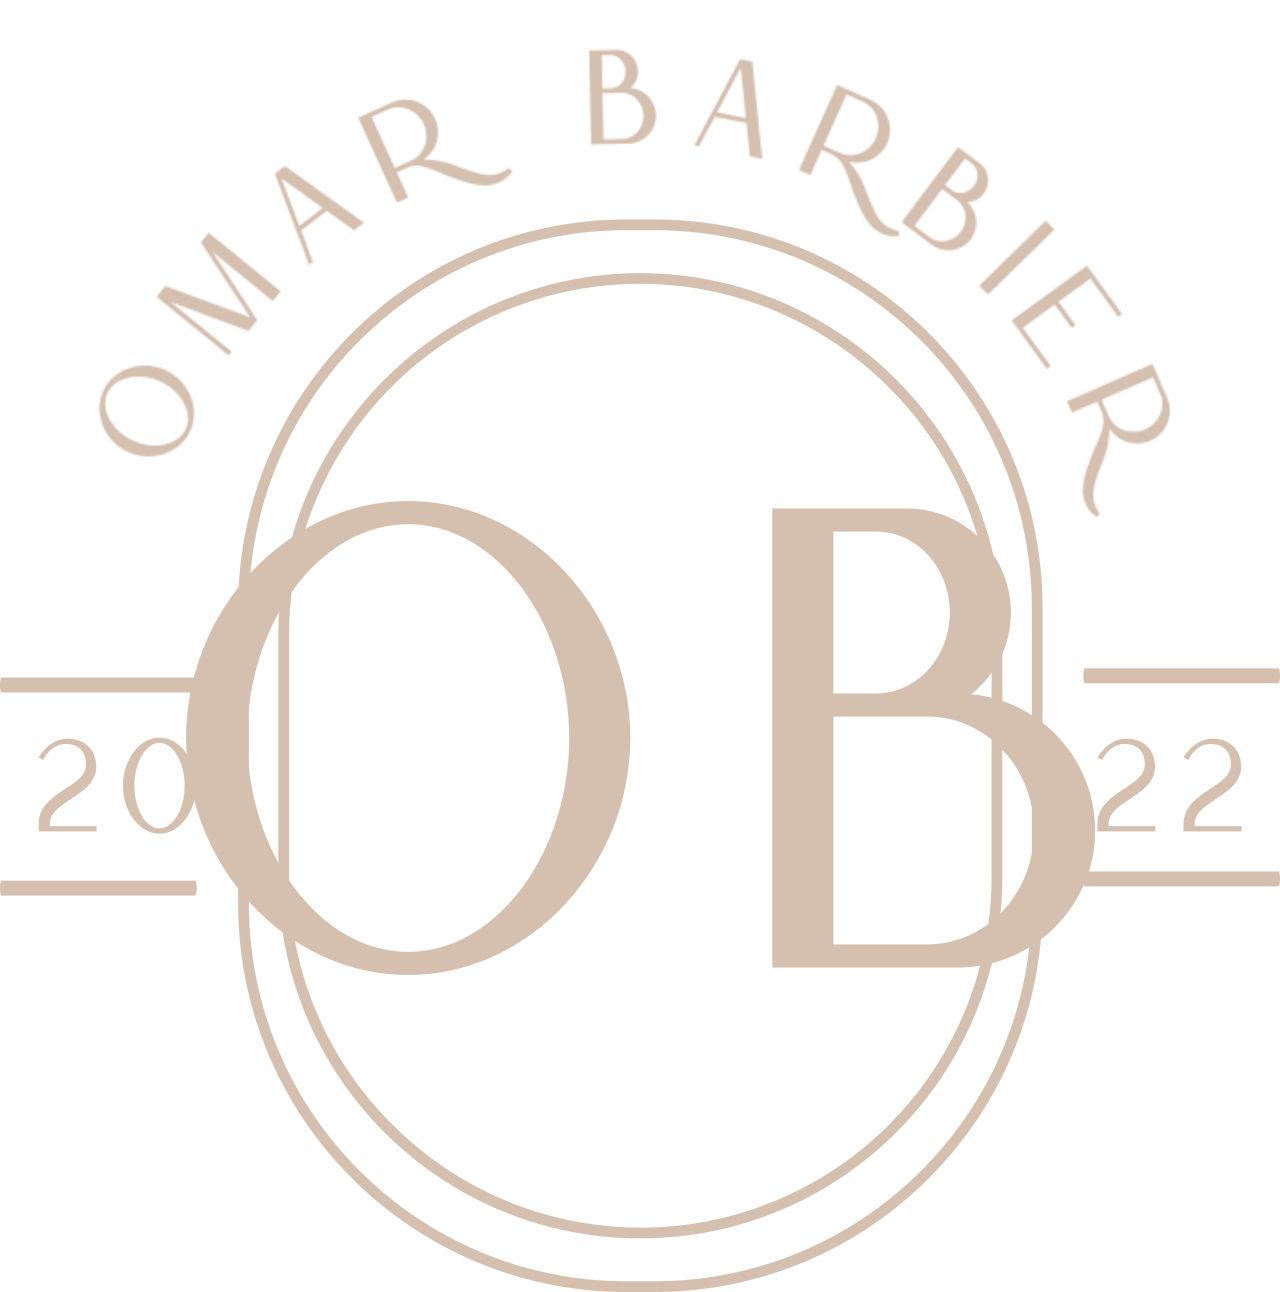 Omar Barbier's web page